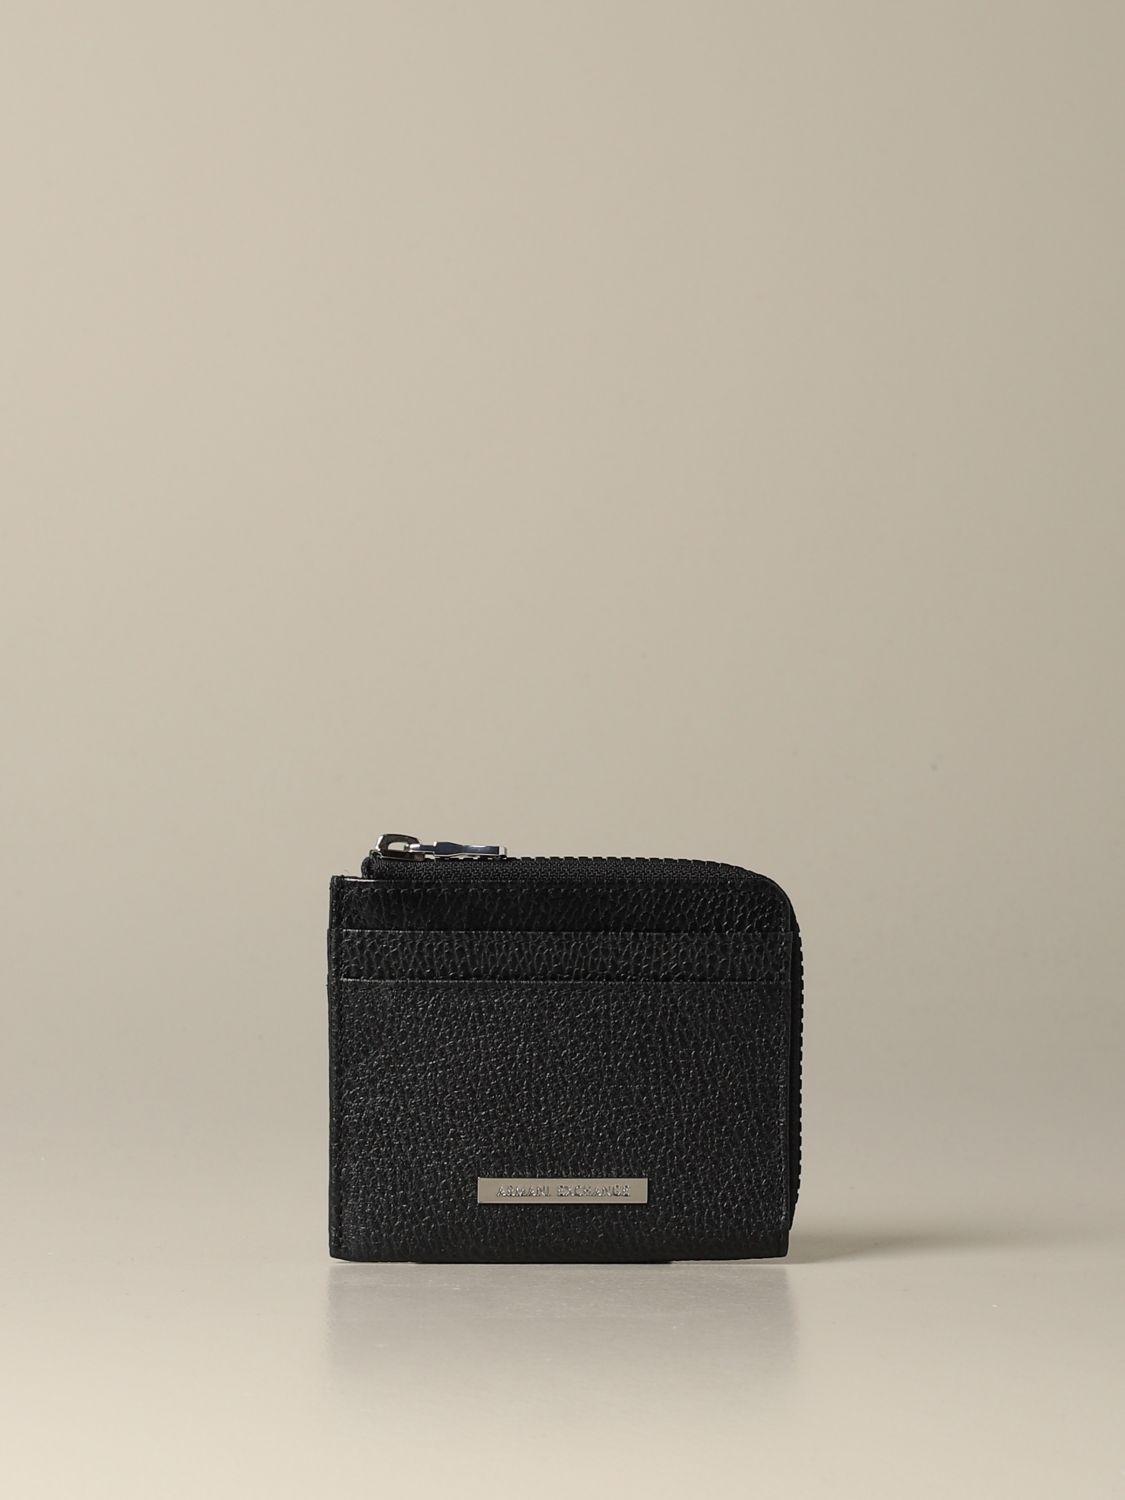 Armani Exchange Wallet in Black for Men - Lyst